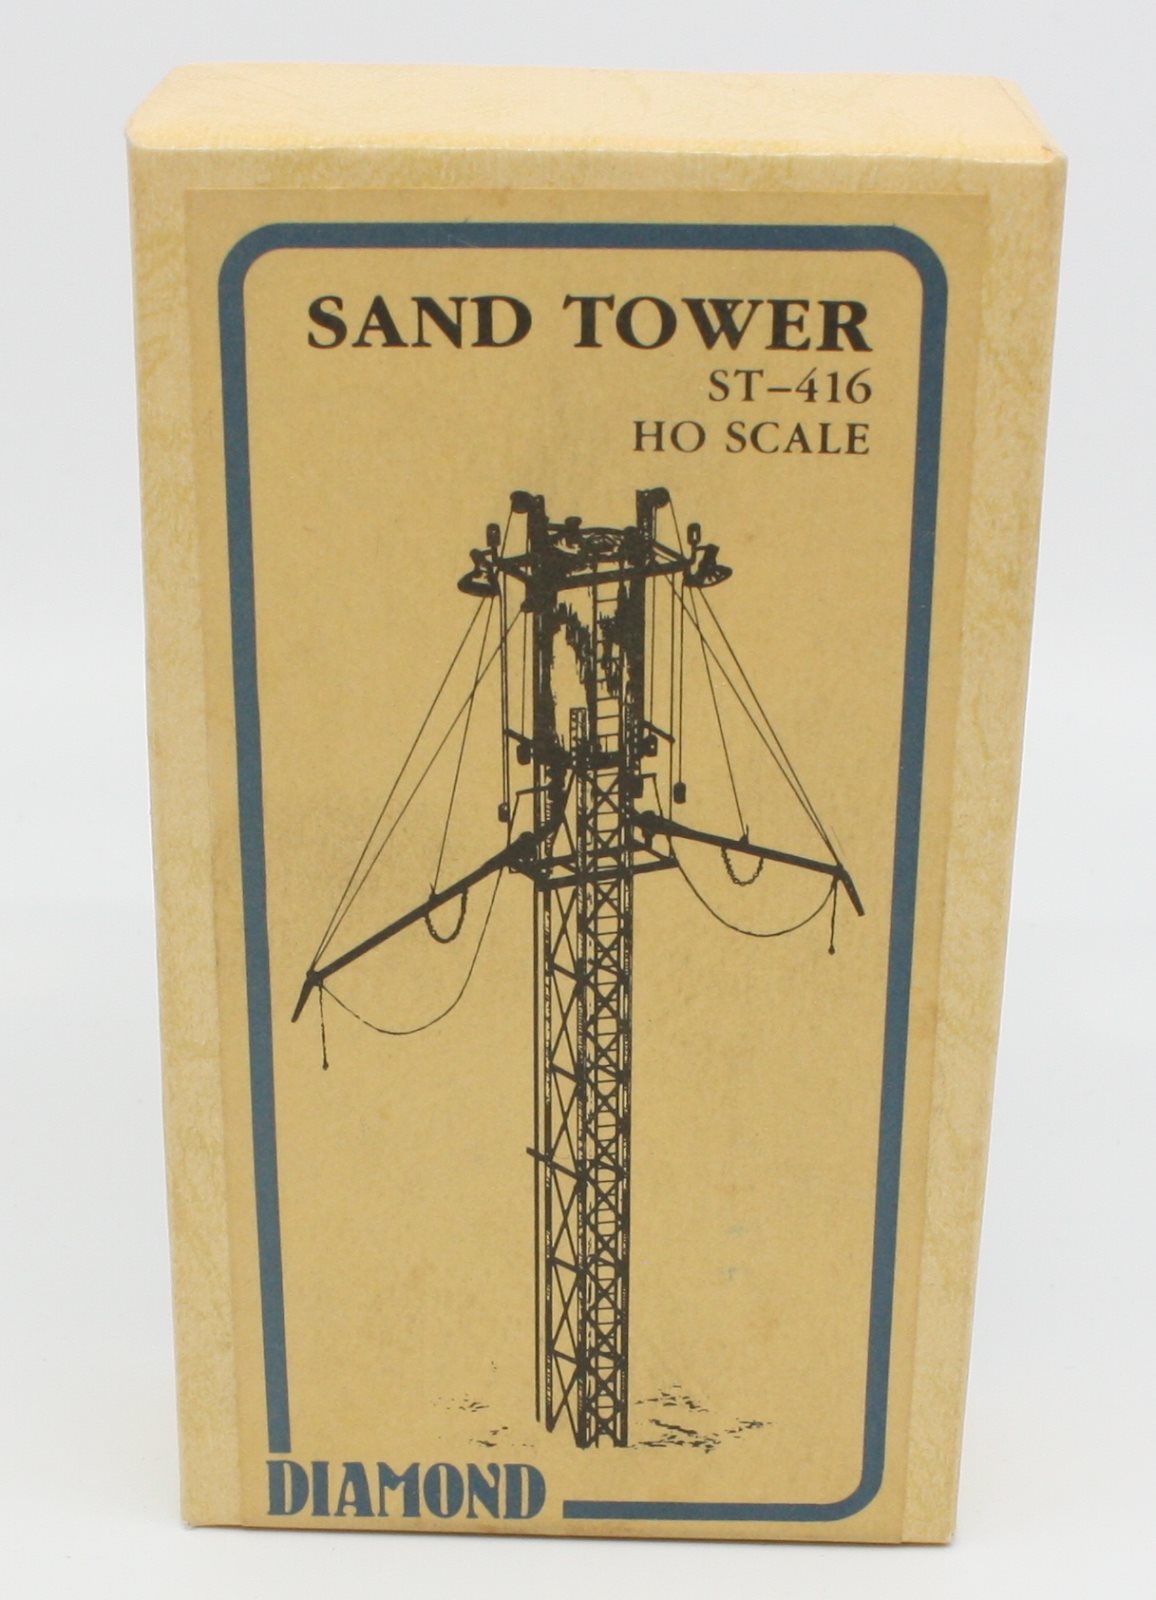 Diamond Scale ST-416 HO Sand Tower Building Kit